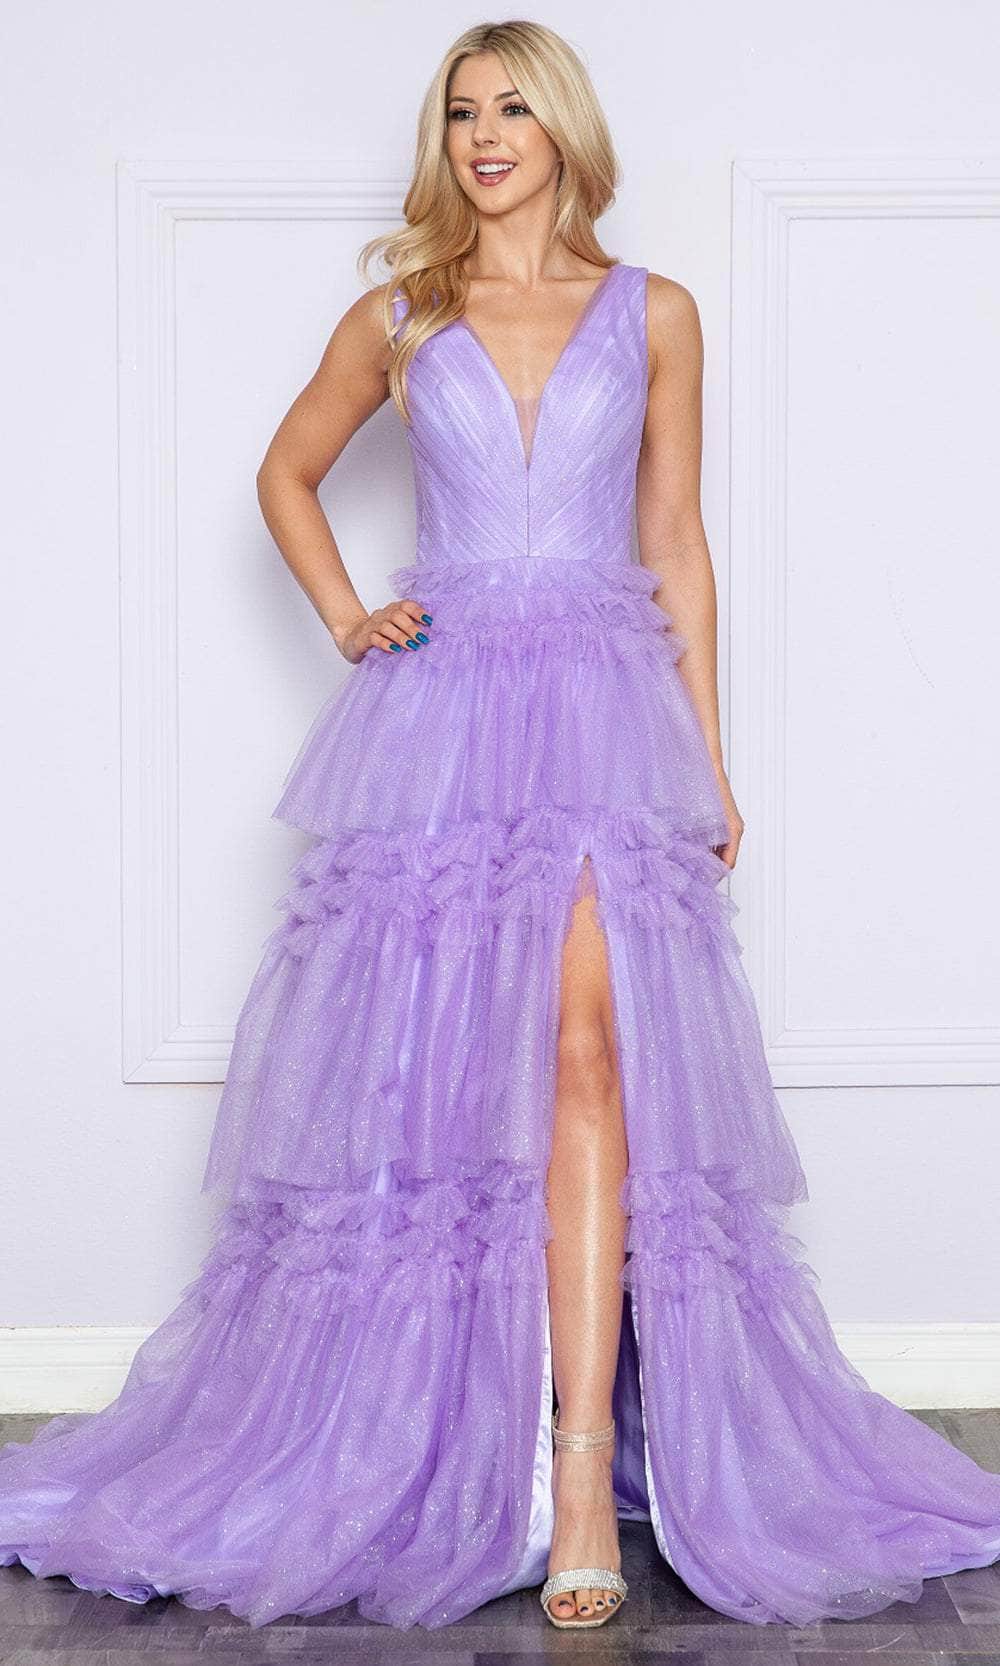 Image of Poly USA 9406 - Glitter Sleeveless Tiered Prom Dress